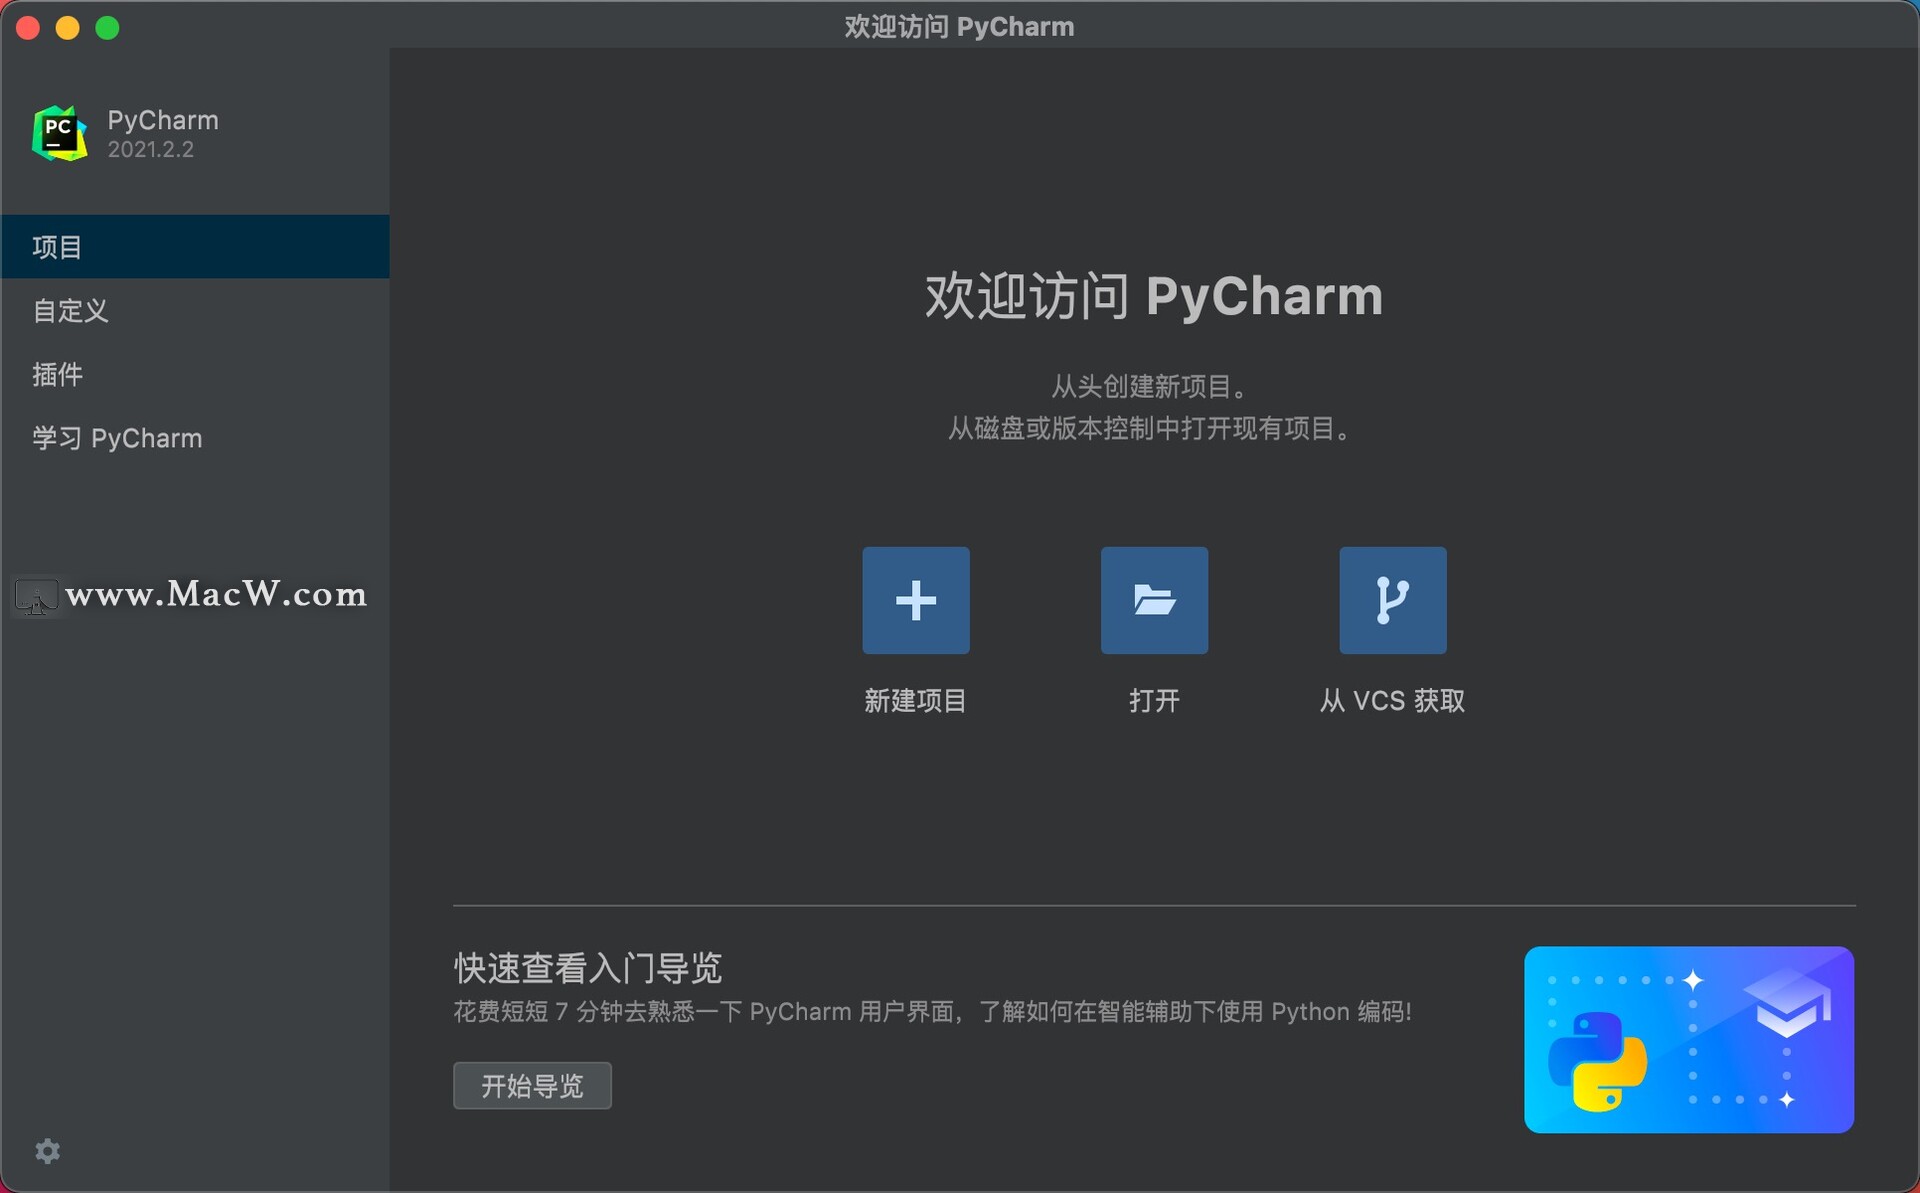 JetBrains pycharm pro 2021 for mac(Python编辑开发)v2021.2.2中文无限试用版 - 图1